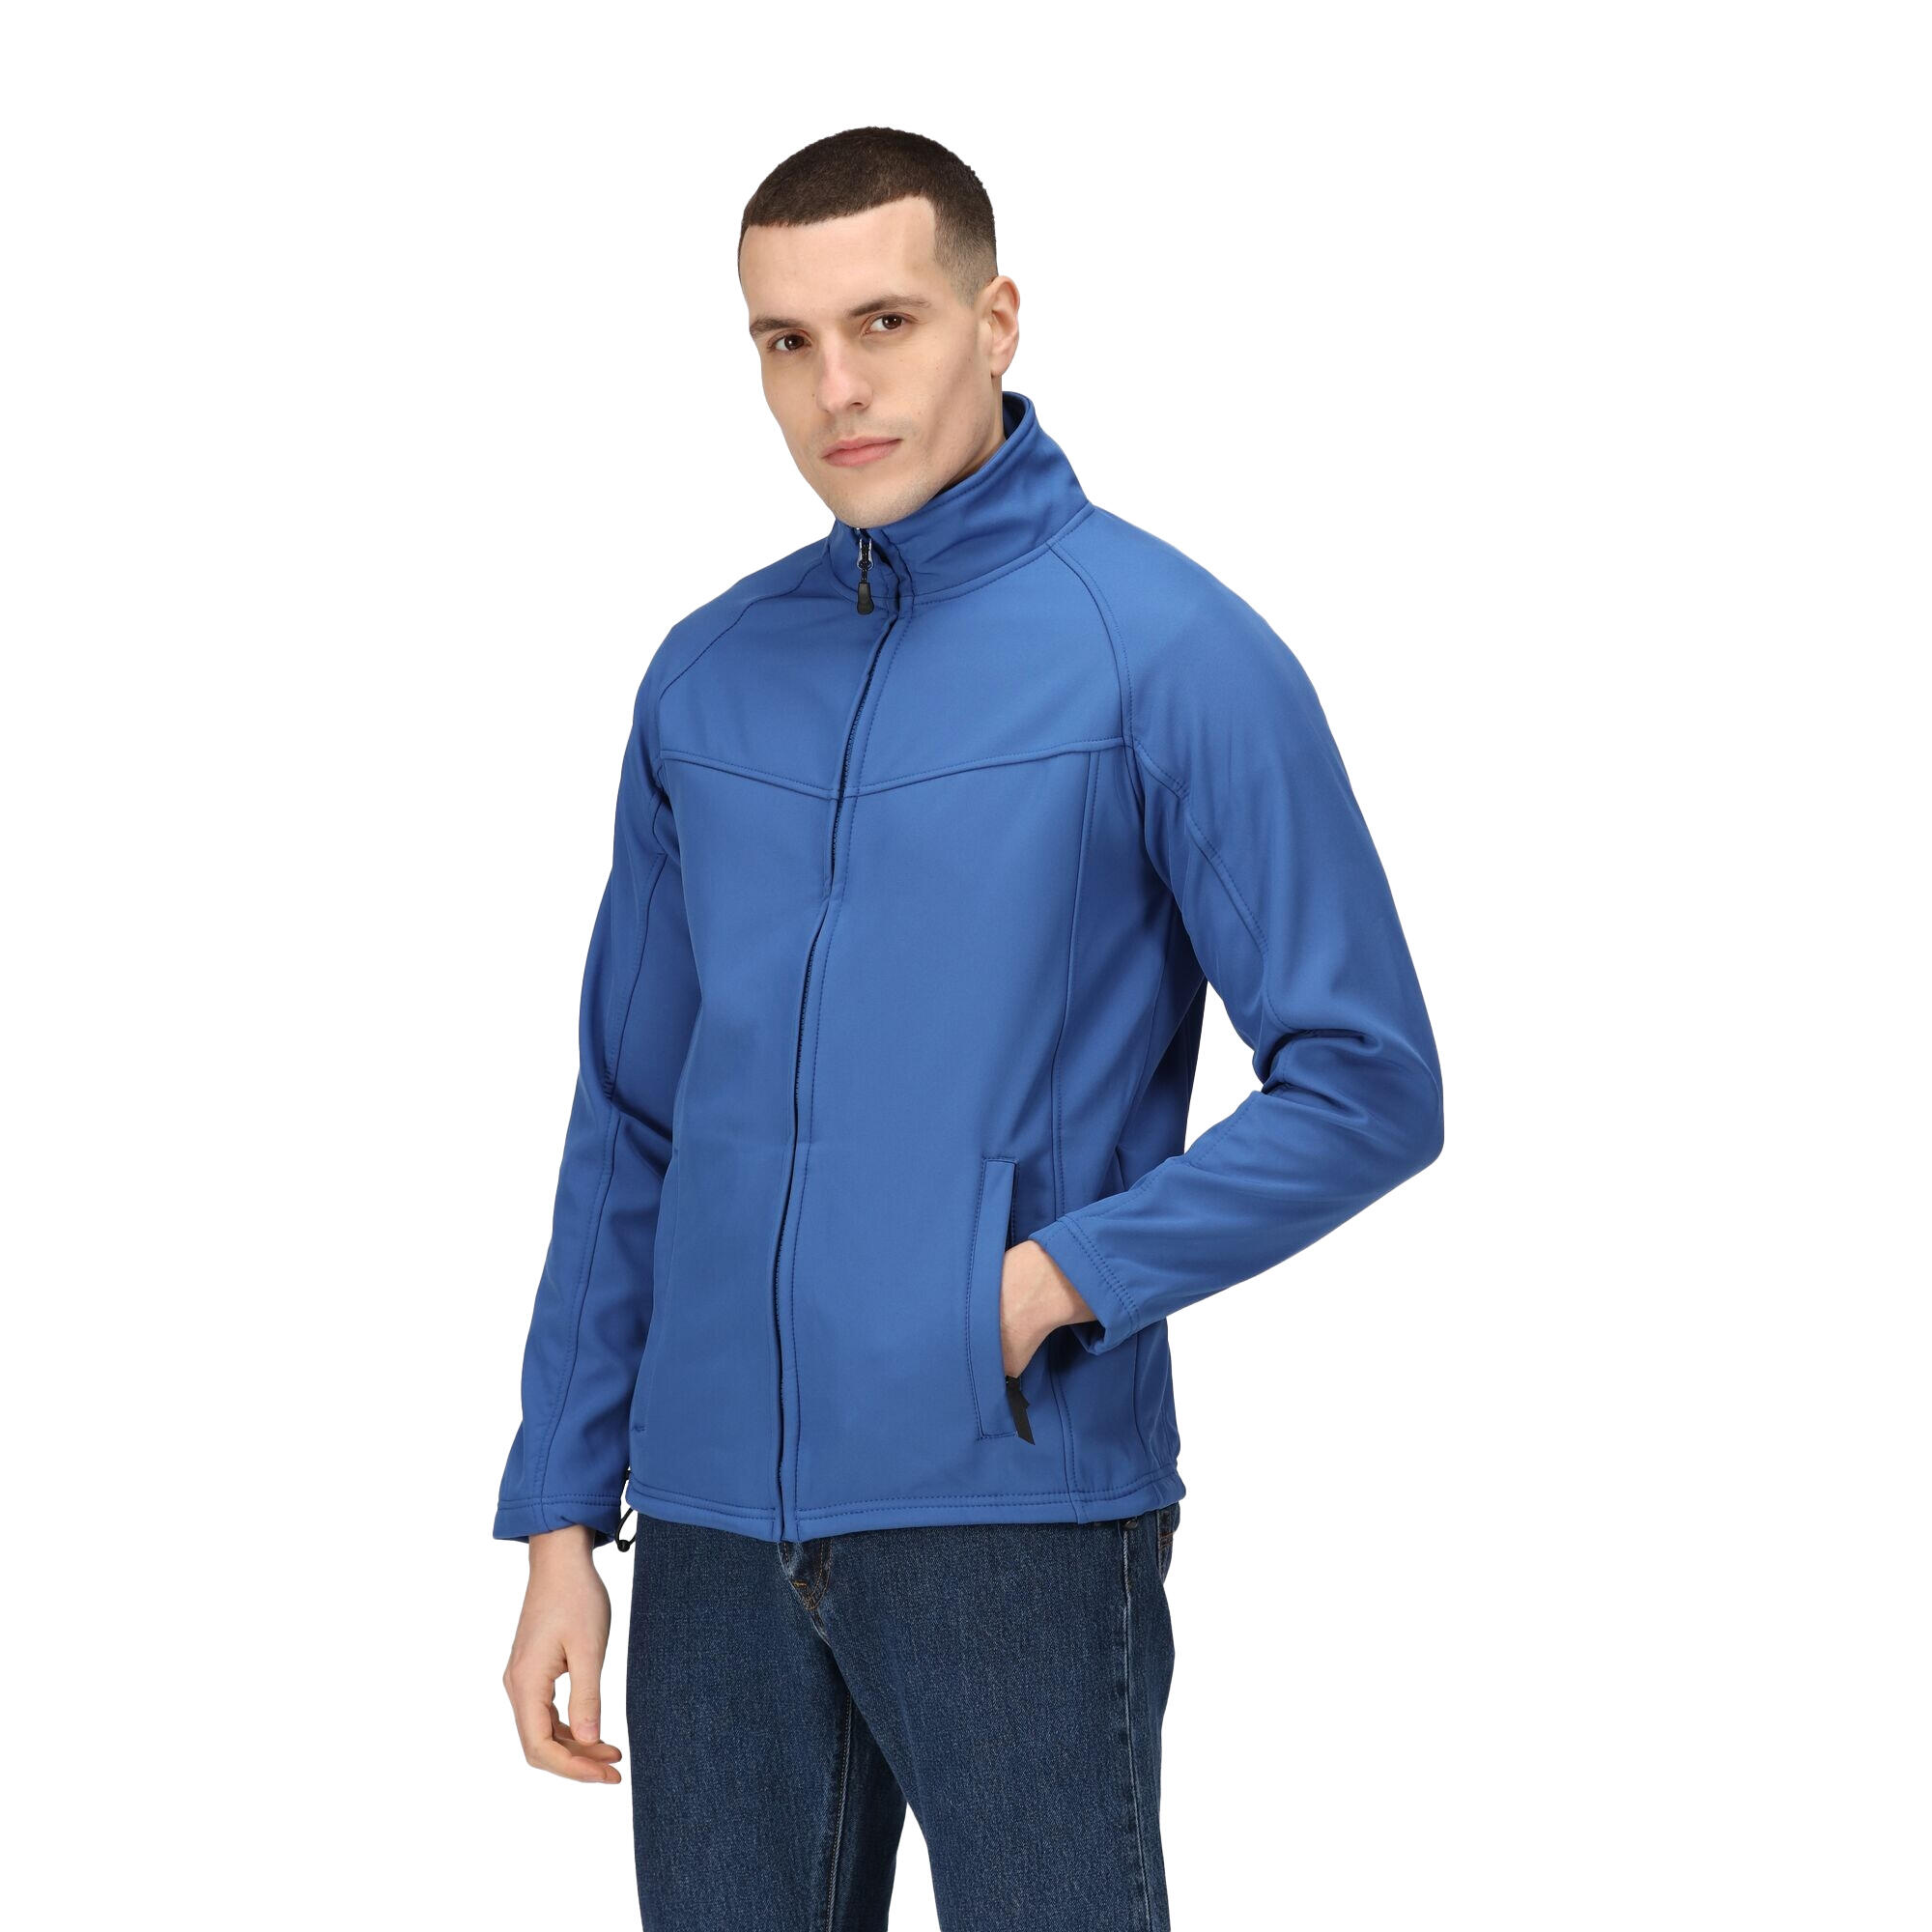 Uproar Mens Softshell Wind Resistant Fleece Jacket (Royal Blue) 3/4